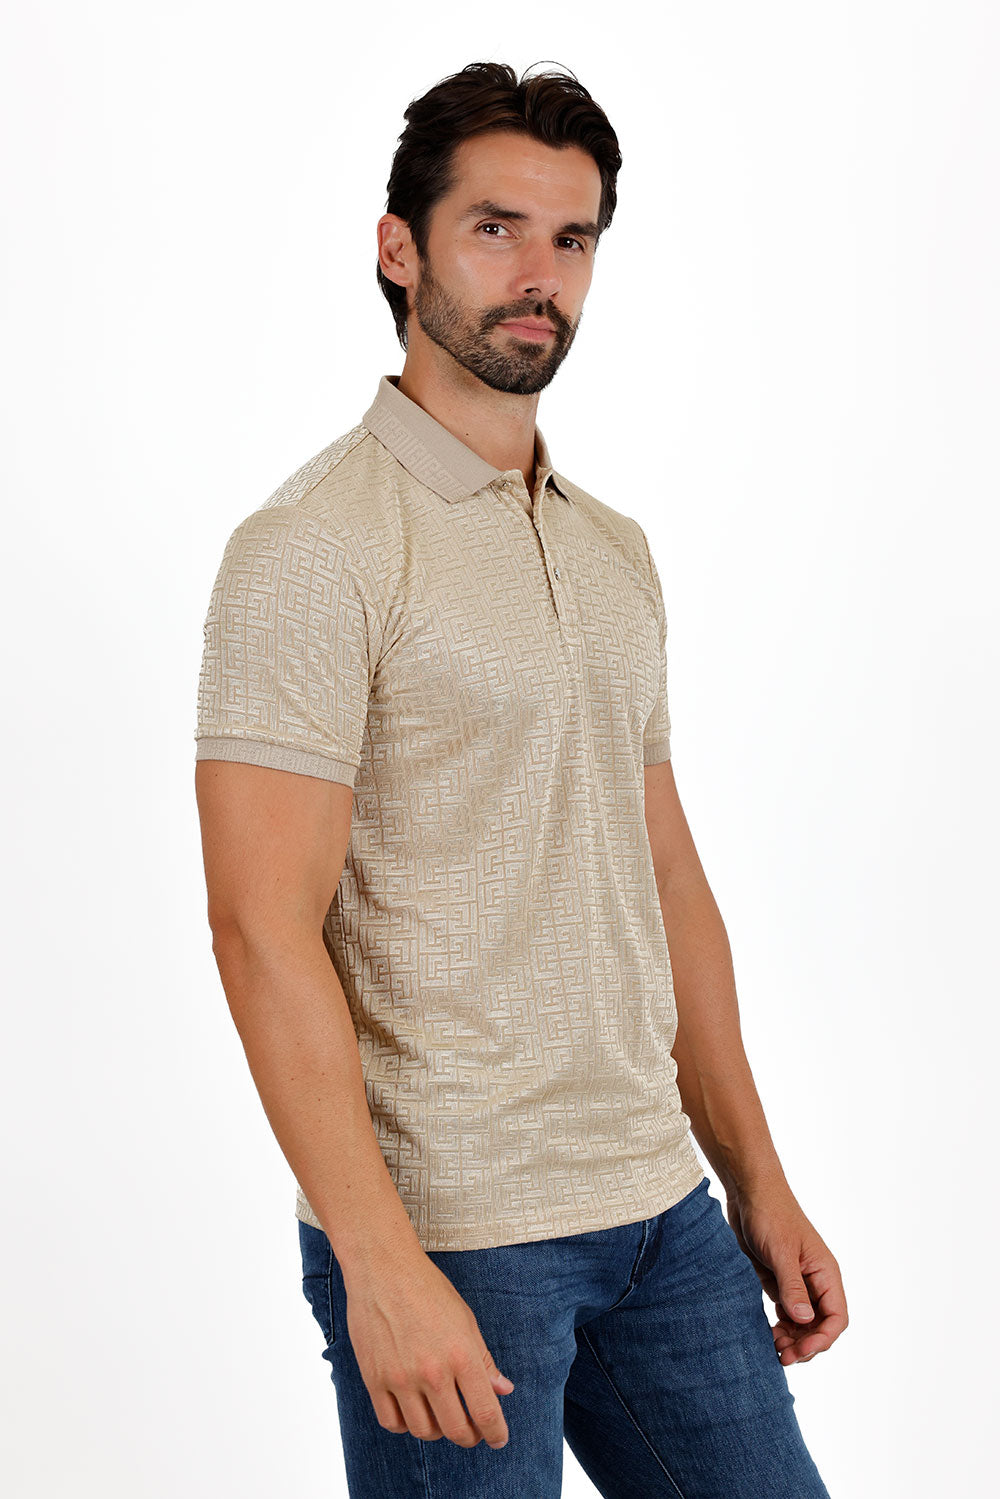 BARABAS Men's Greek Key Pattern Stretch Short Sleeve Polo Shirt 3P10 cream